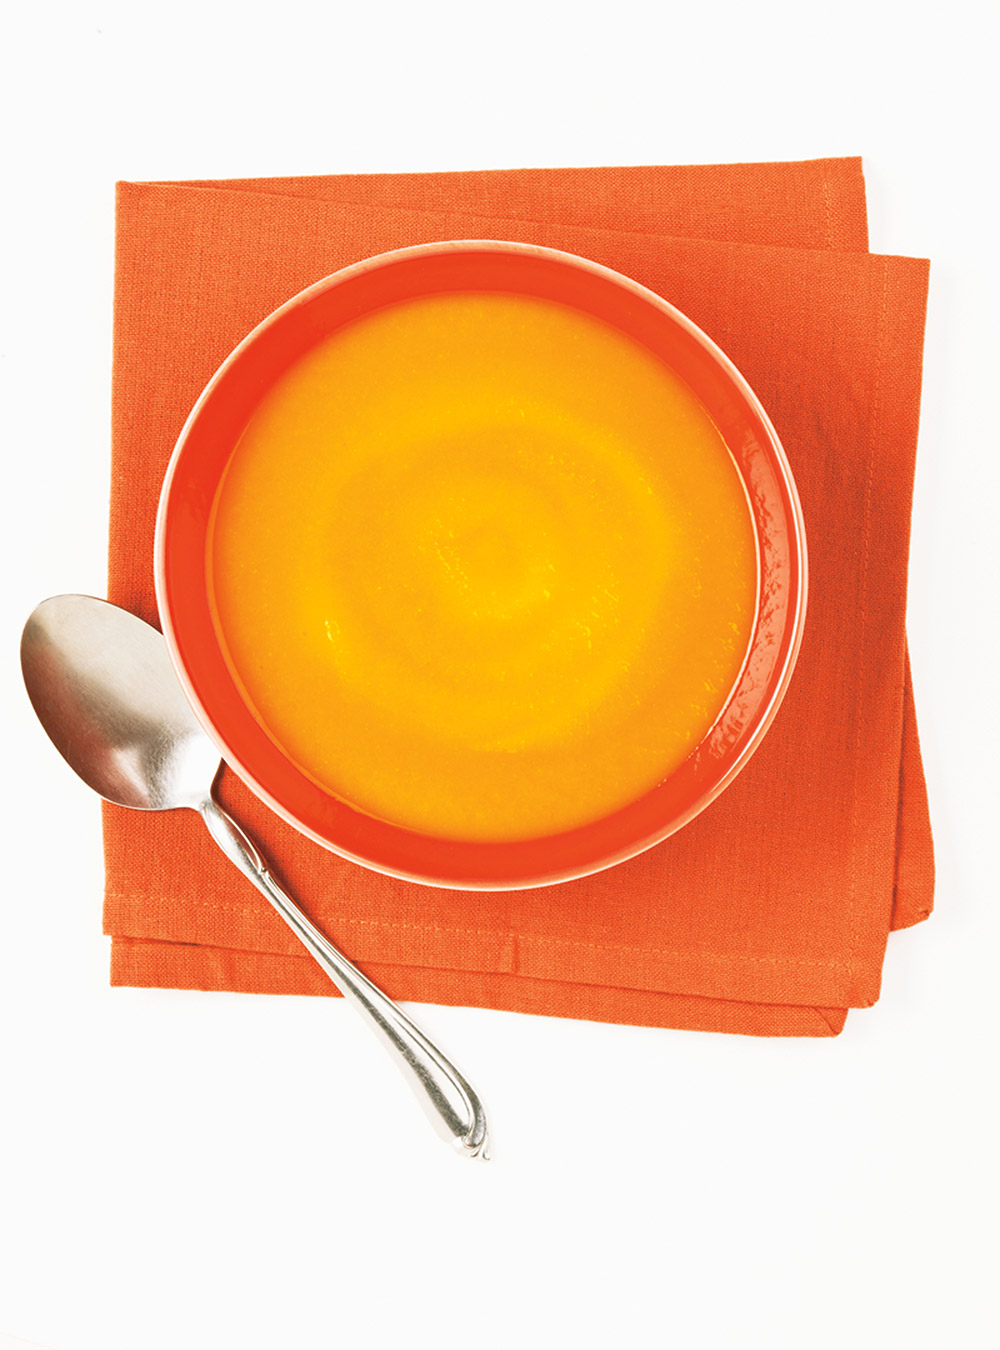 Cream of Carrot Soup (2)